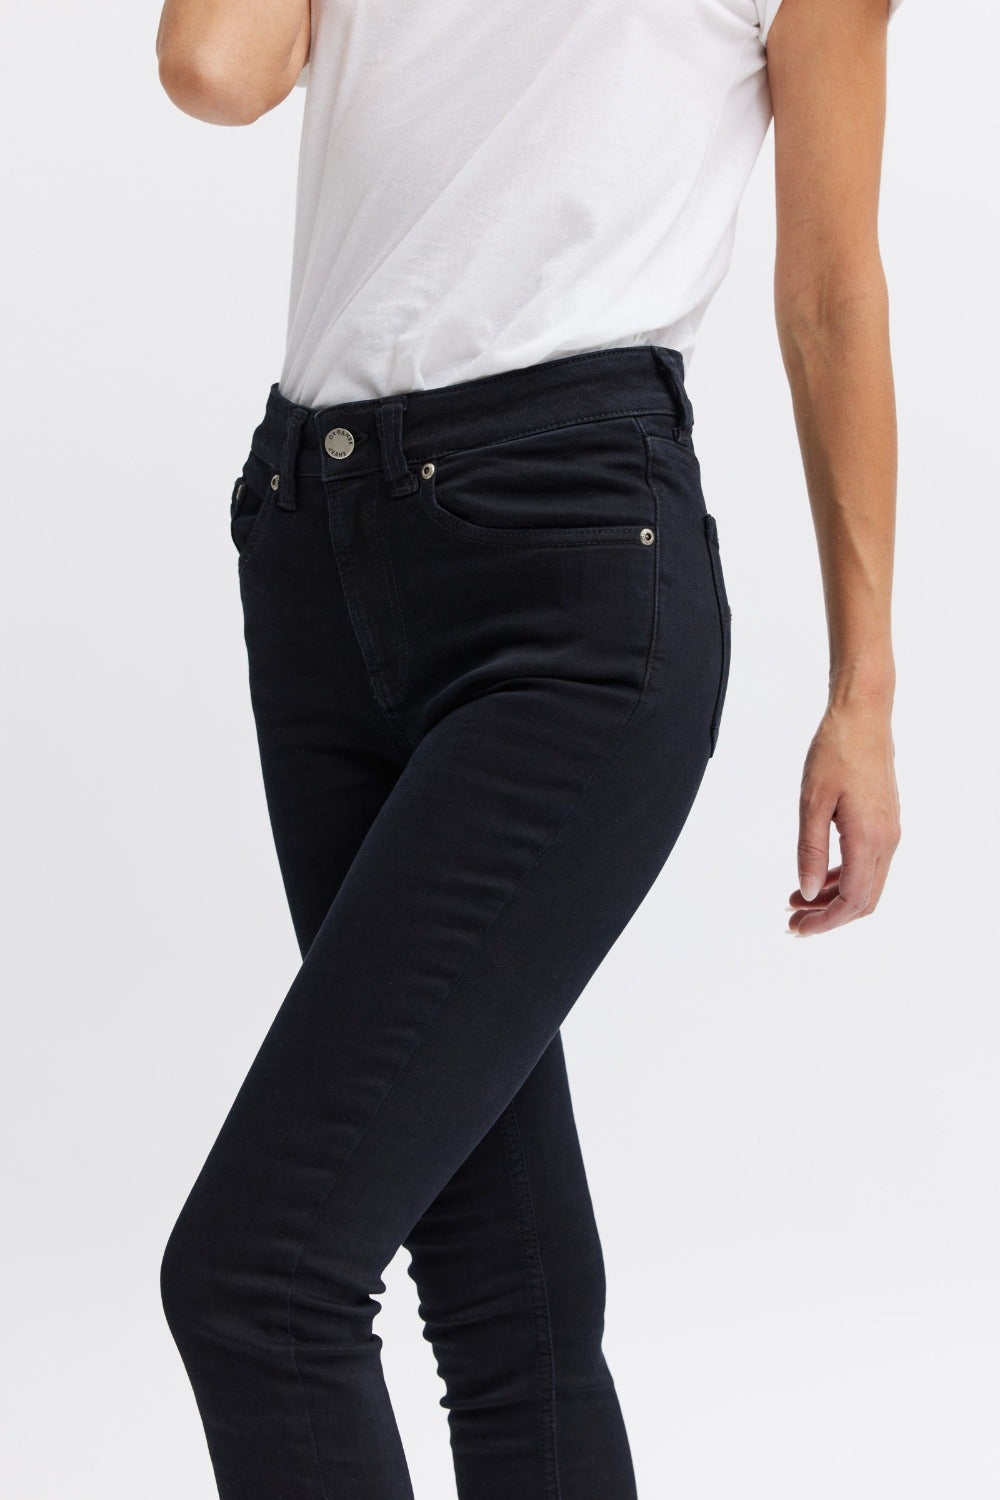 Eco label black jeans - comfort denim